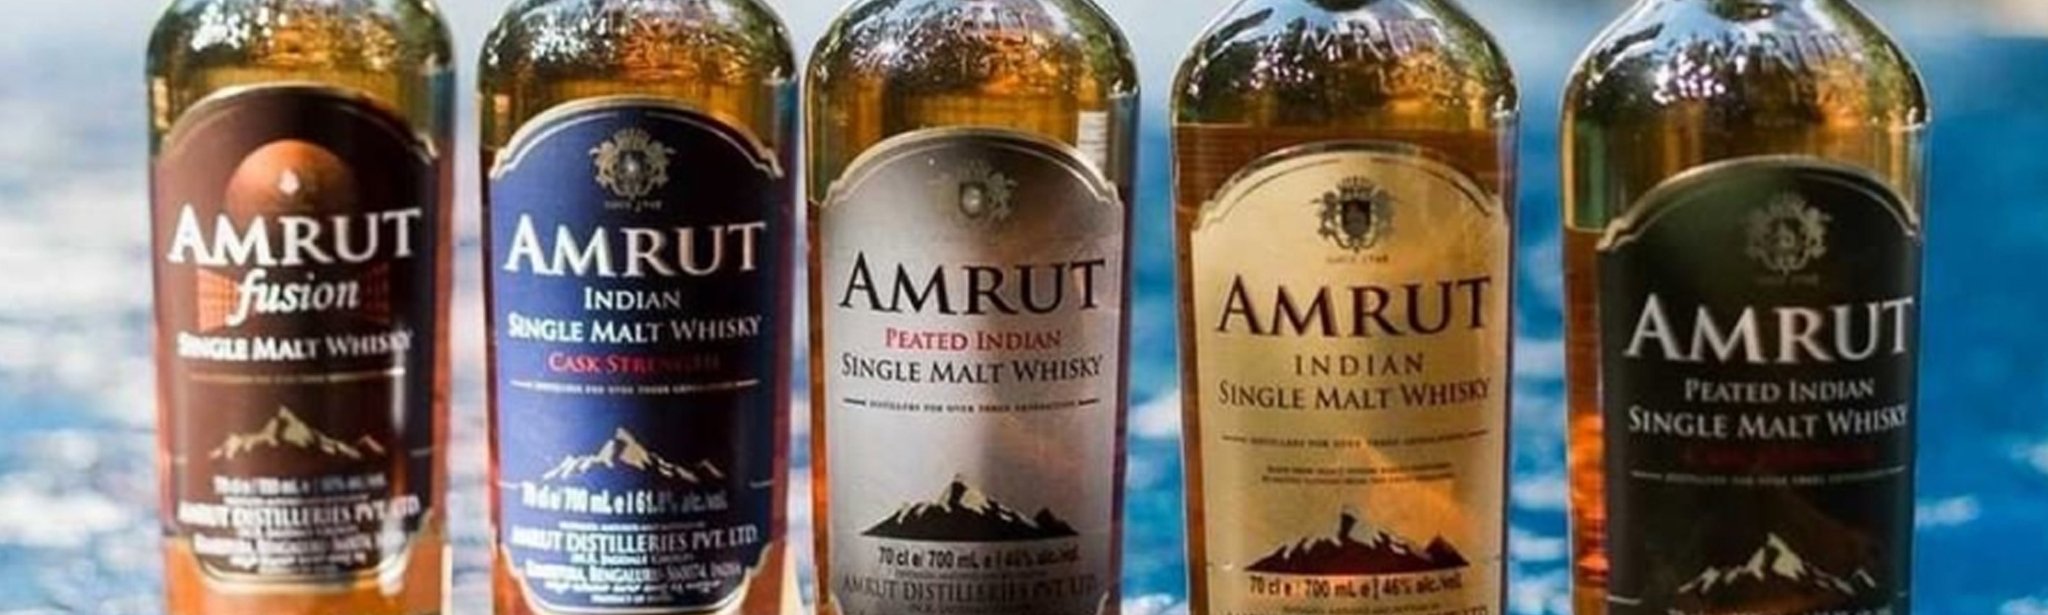 Amrut - The Bottle Club